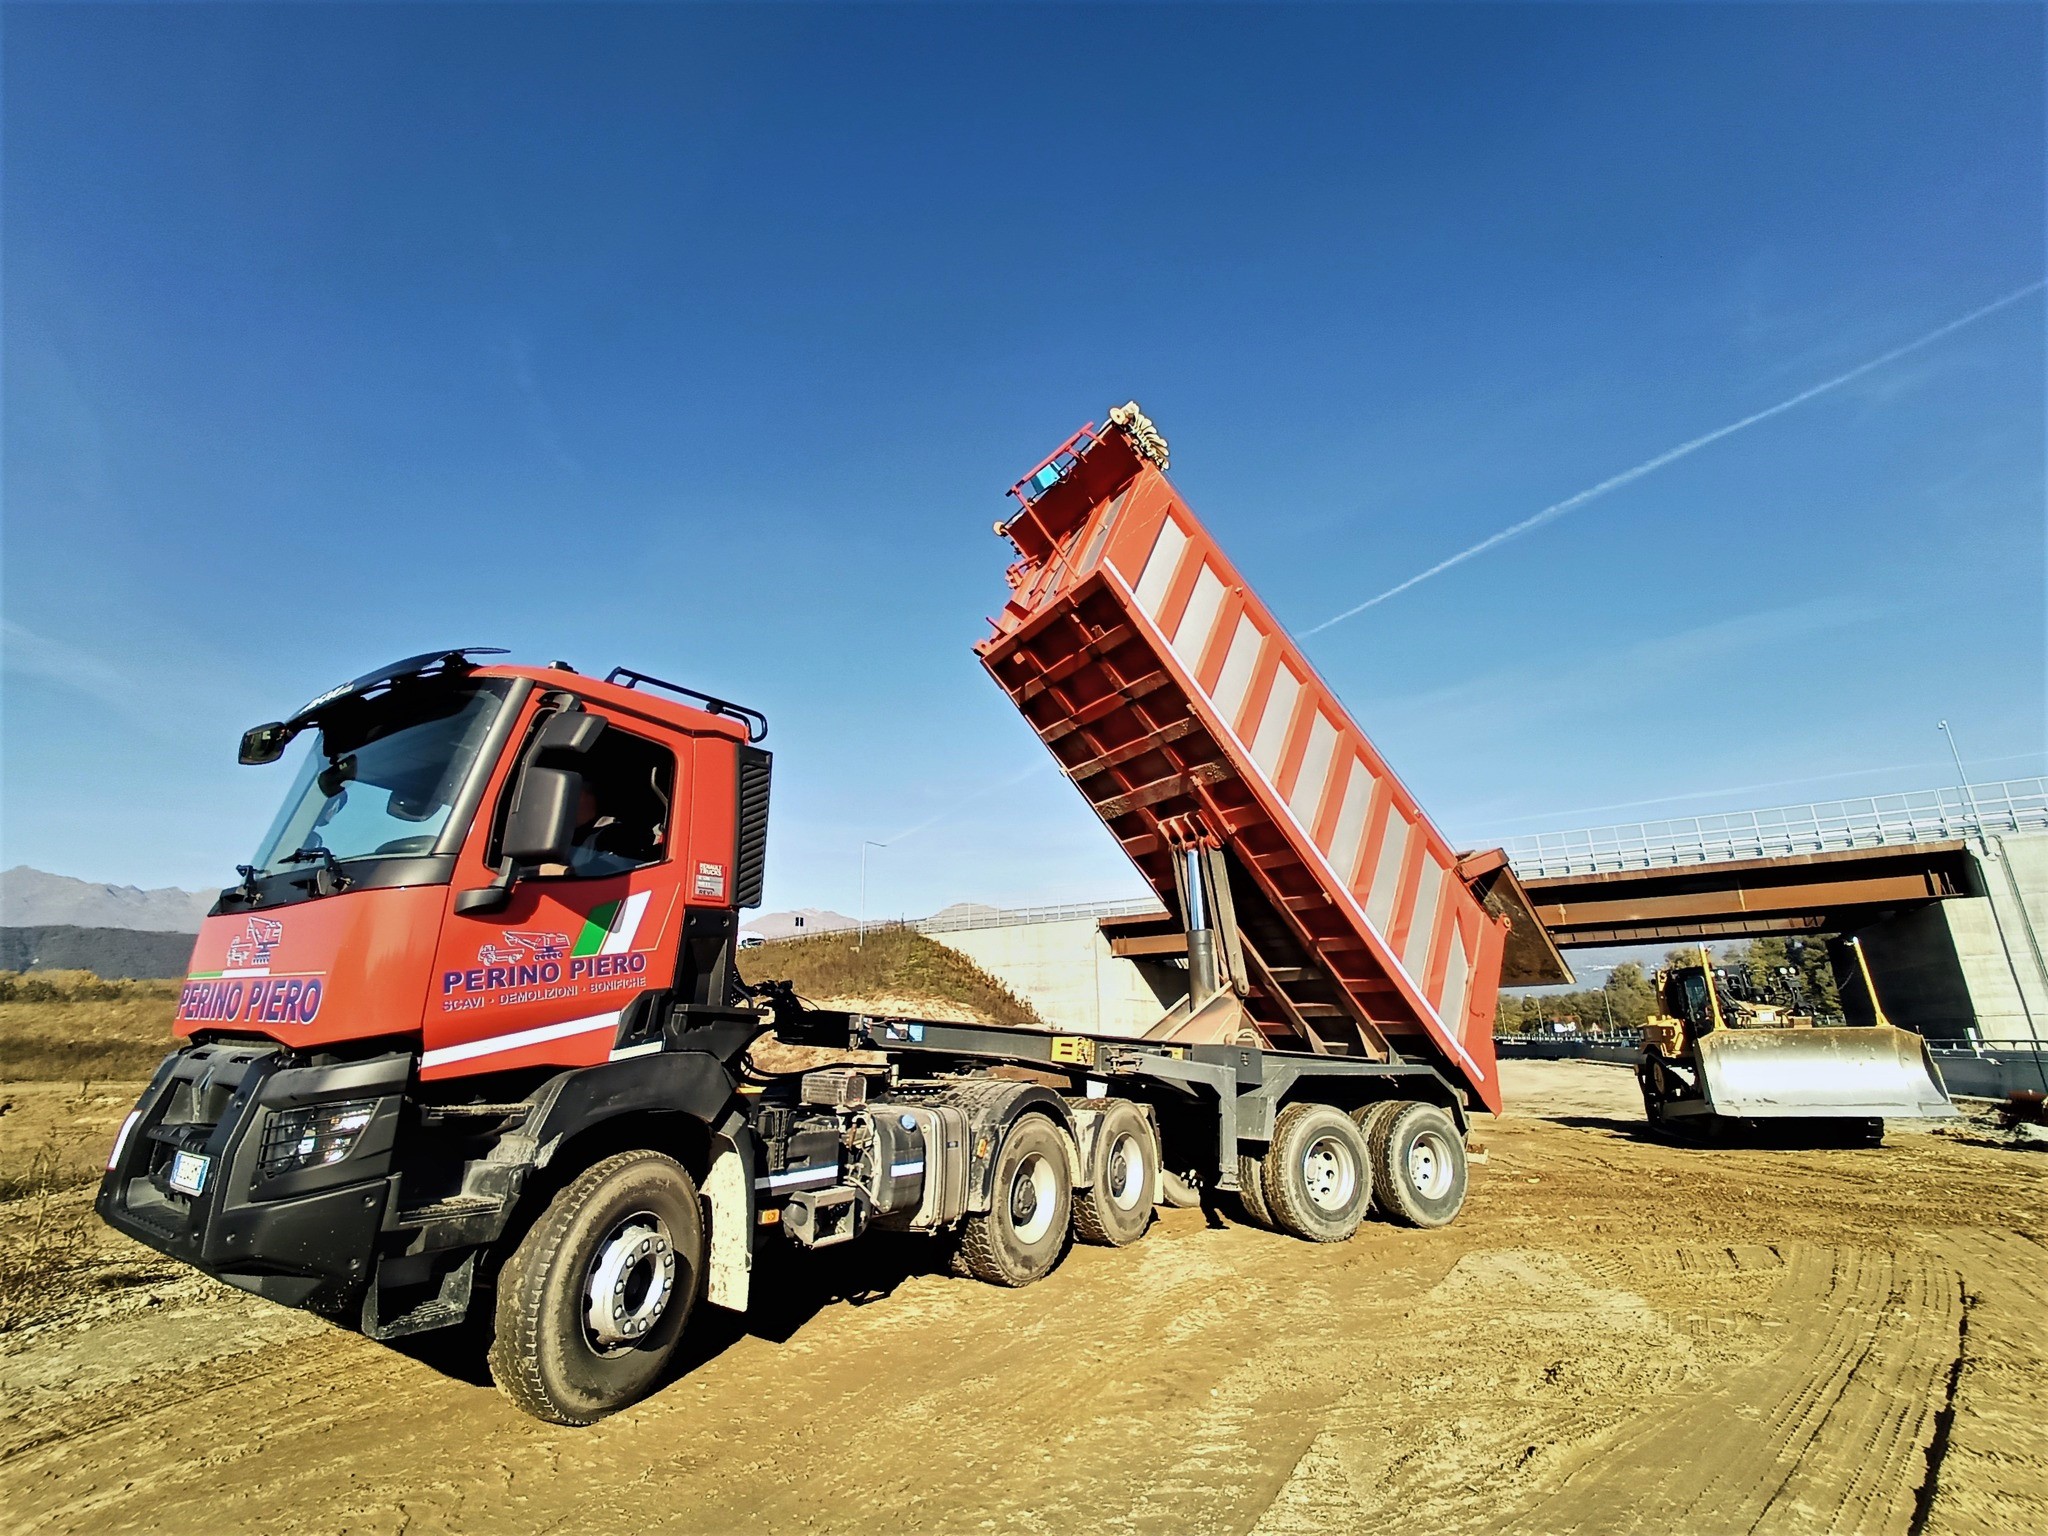 La Perino Piero impiega i camion Renault Trucks per diversi impieghi